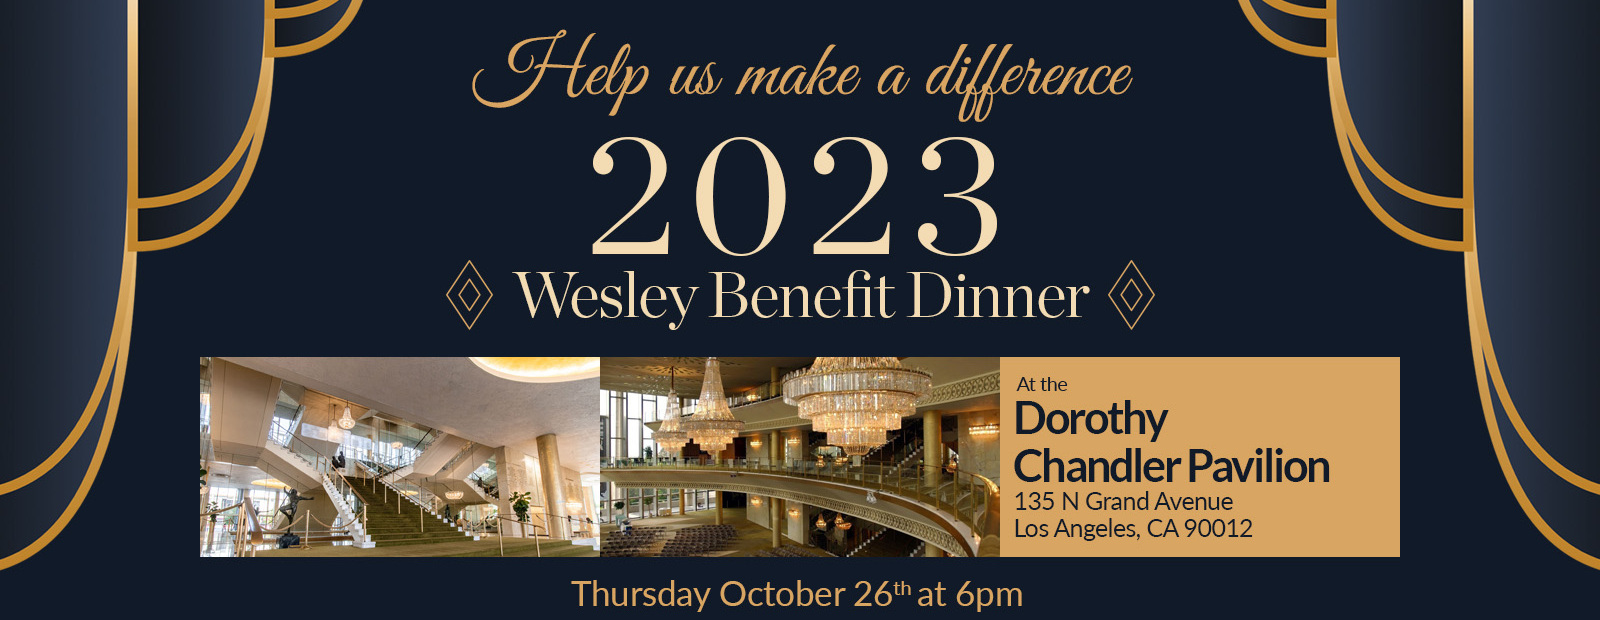 Wesley Benefit Dinner 2023